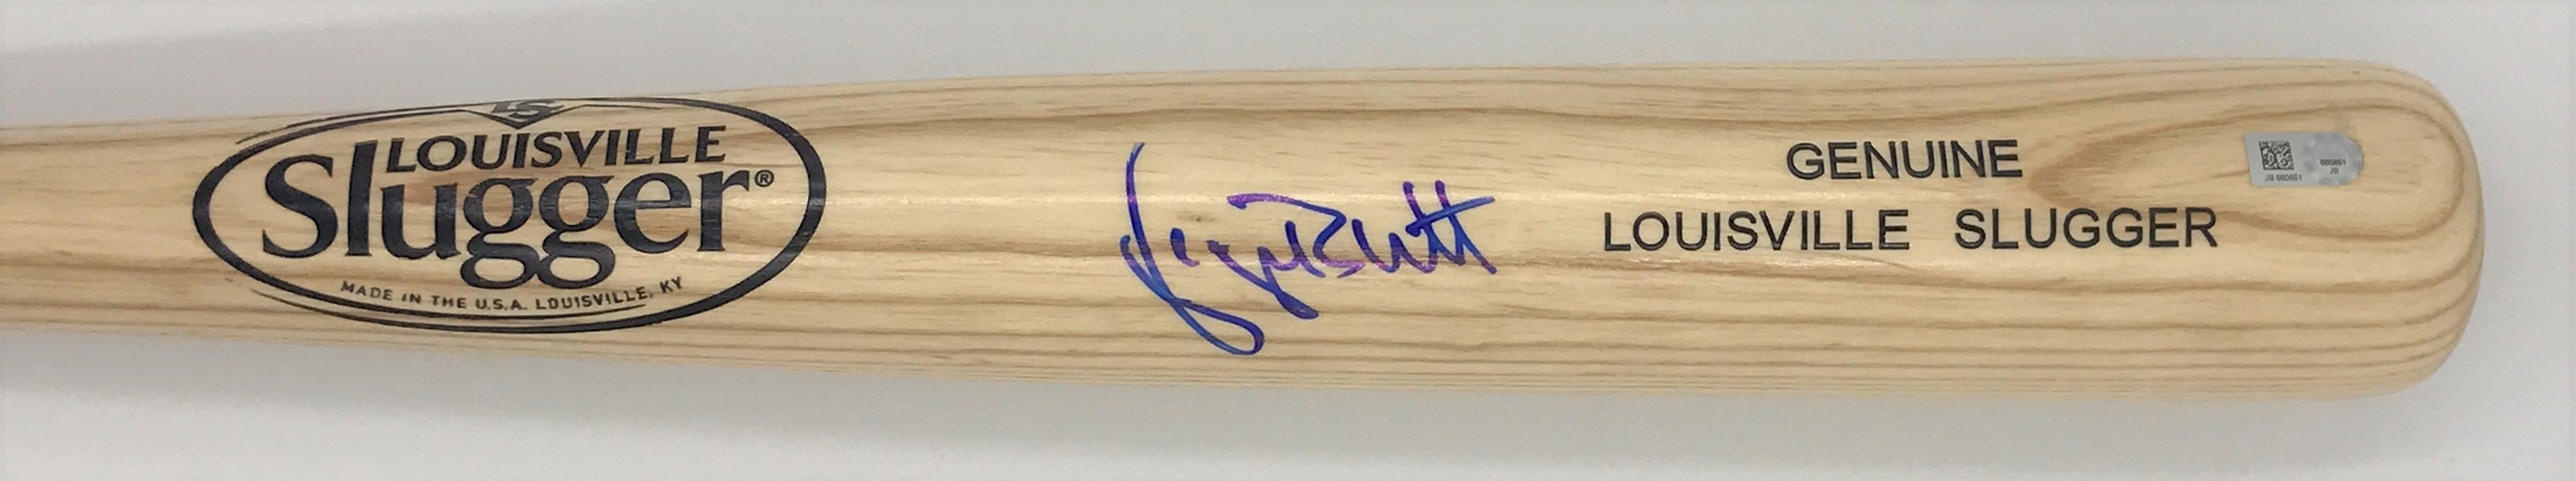 Kansas City HOFer George Brett Autographed Louisville Slugger Bat MLB Authenticated